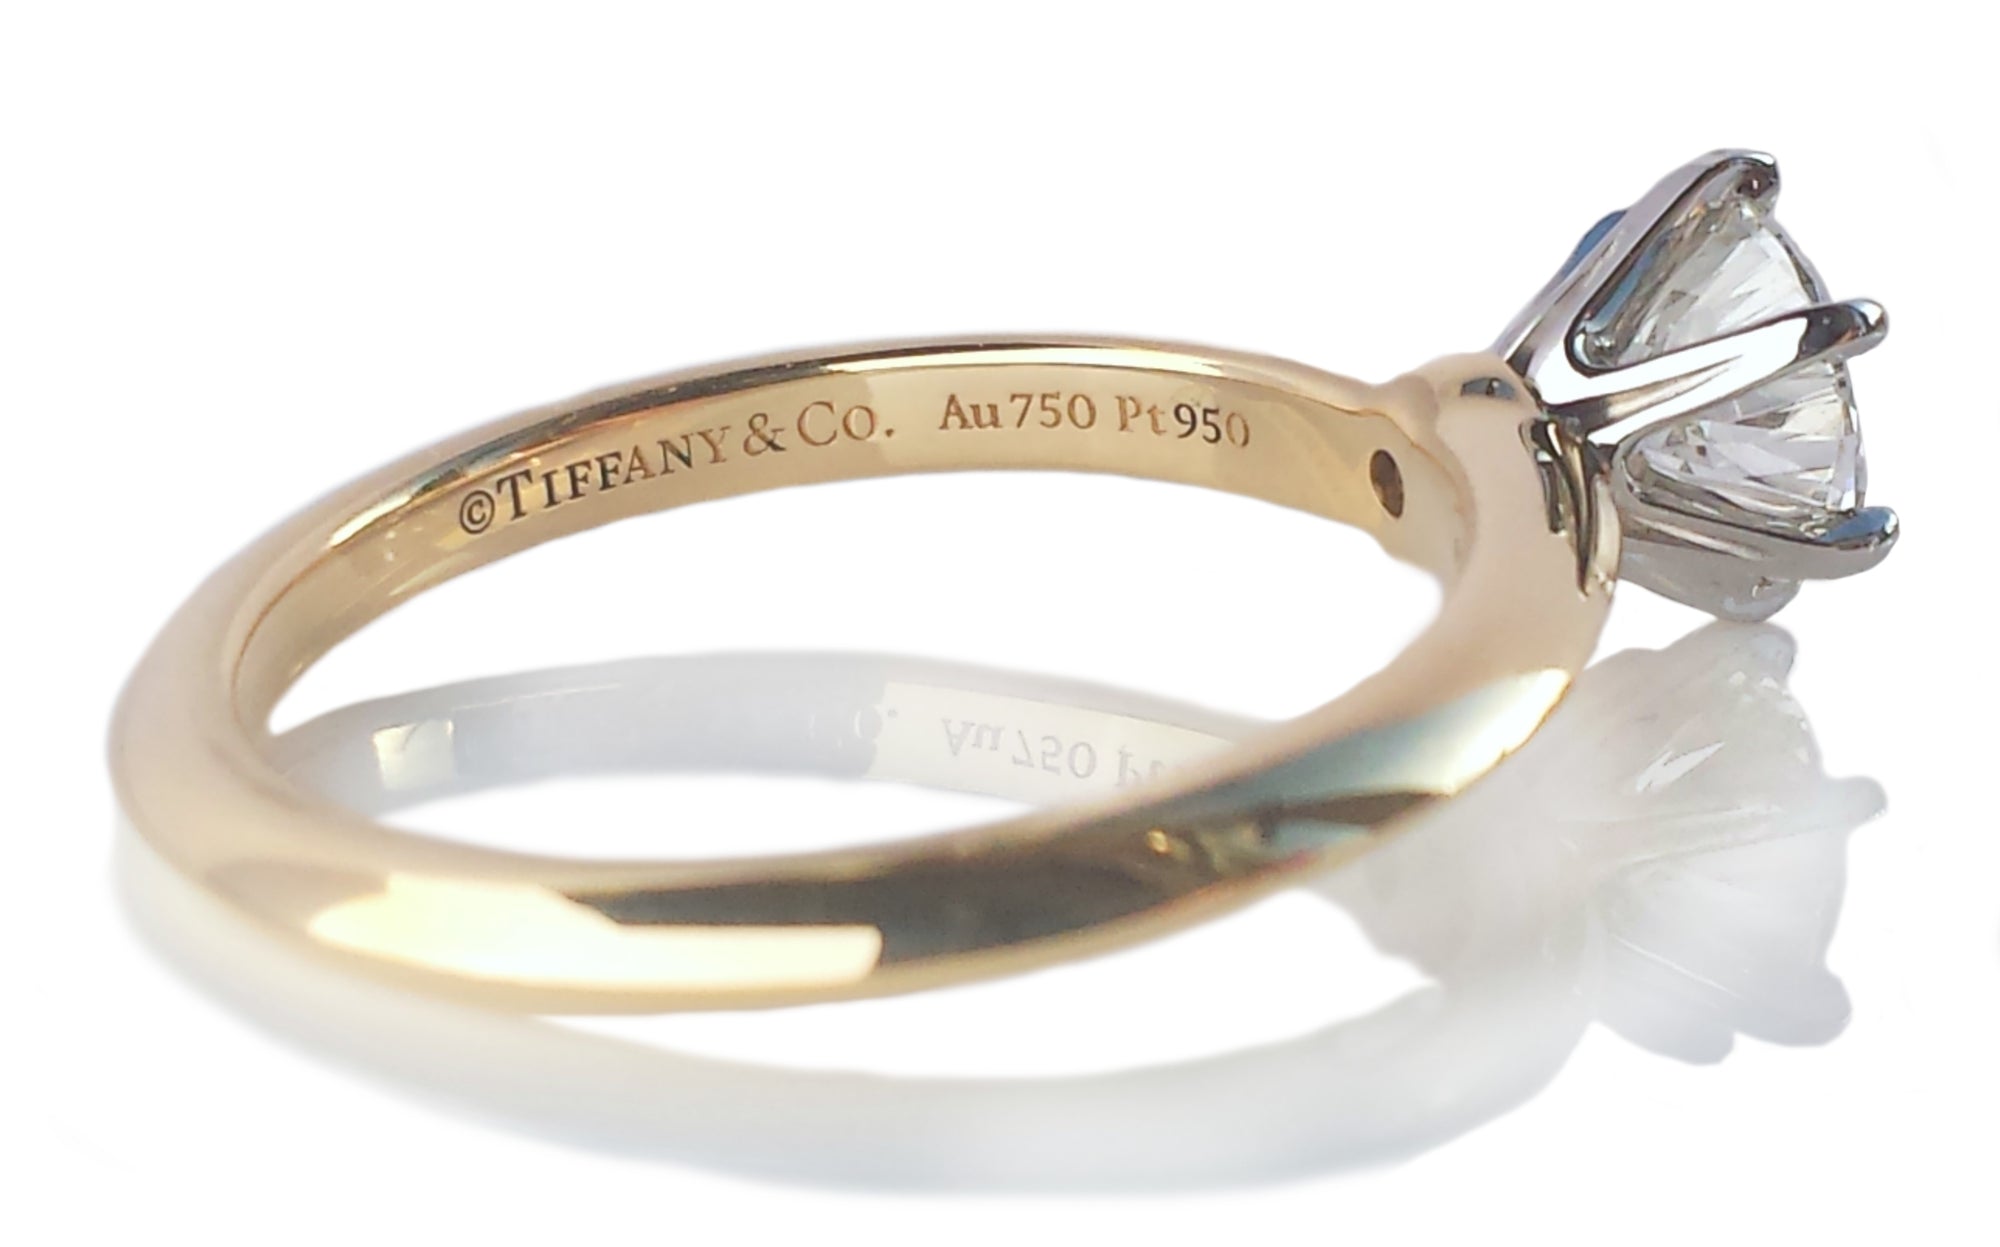 Tiffany & Co. 0.73ct H/VVS2 Round Brilliant Diamond & 18K Yellow Gold Engagement Ring